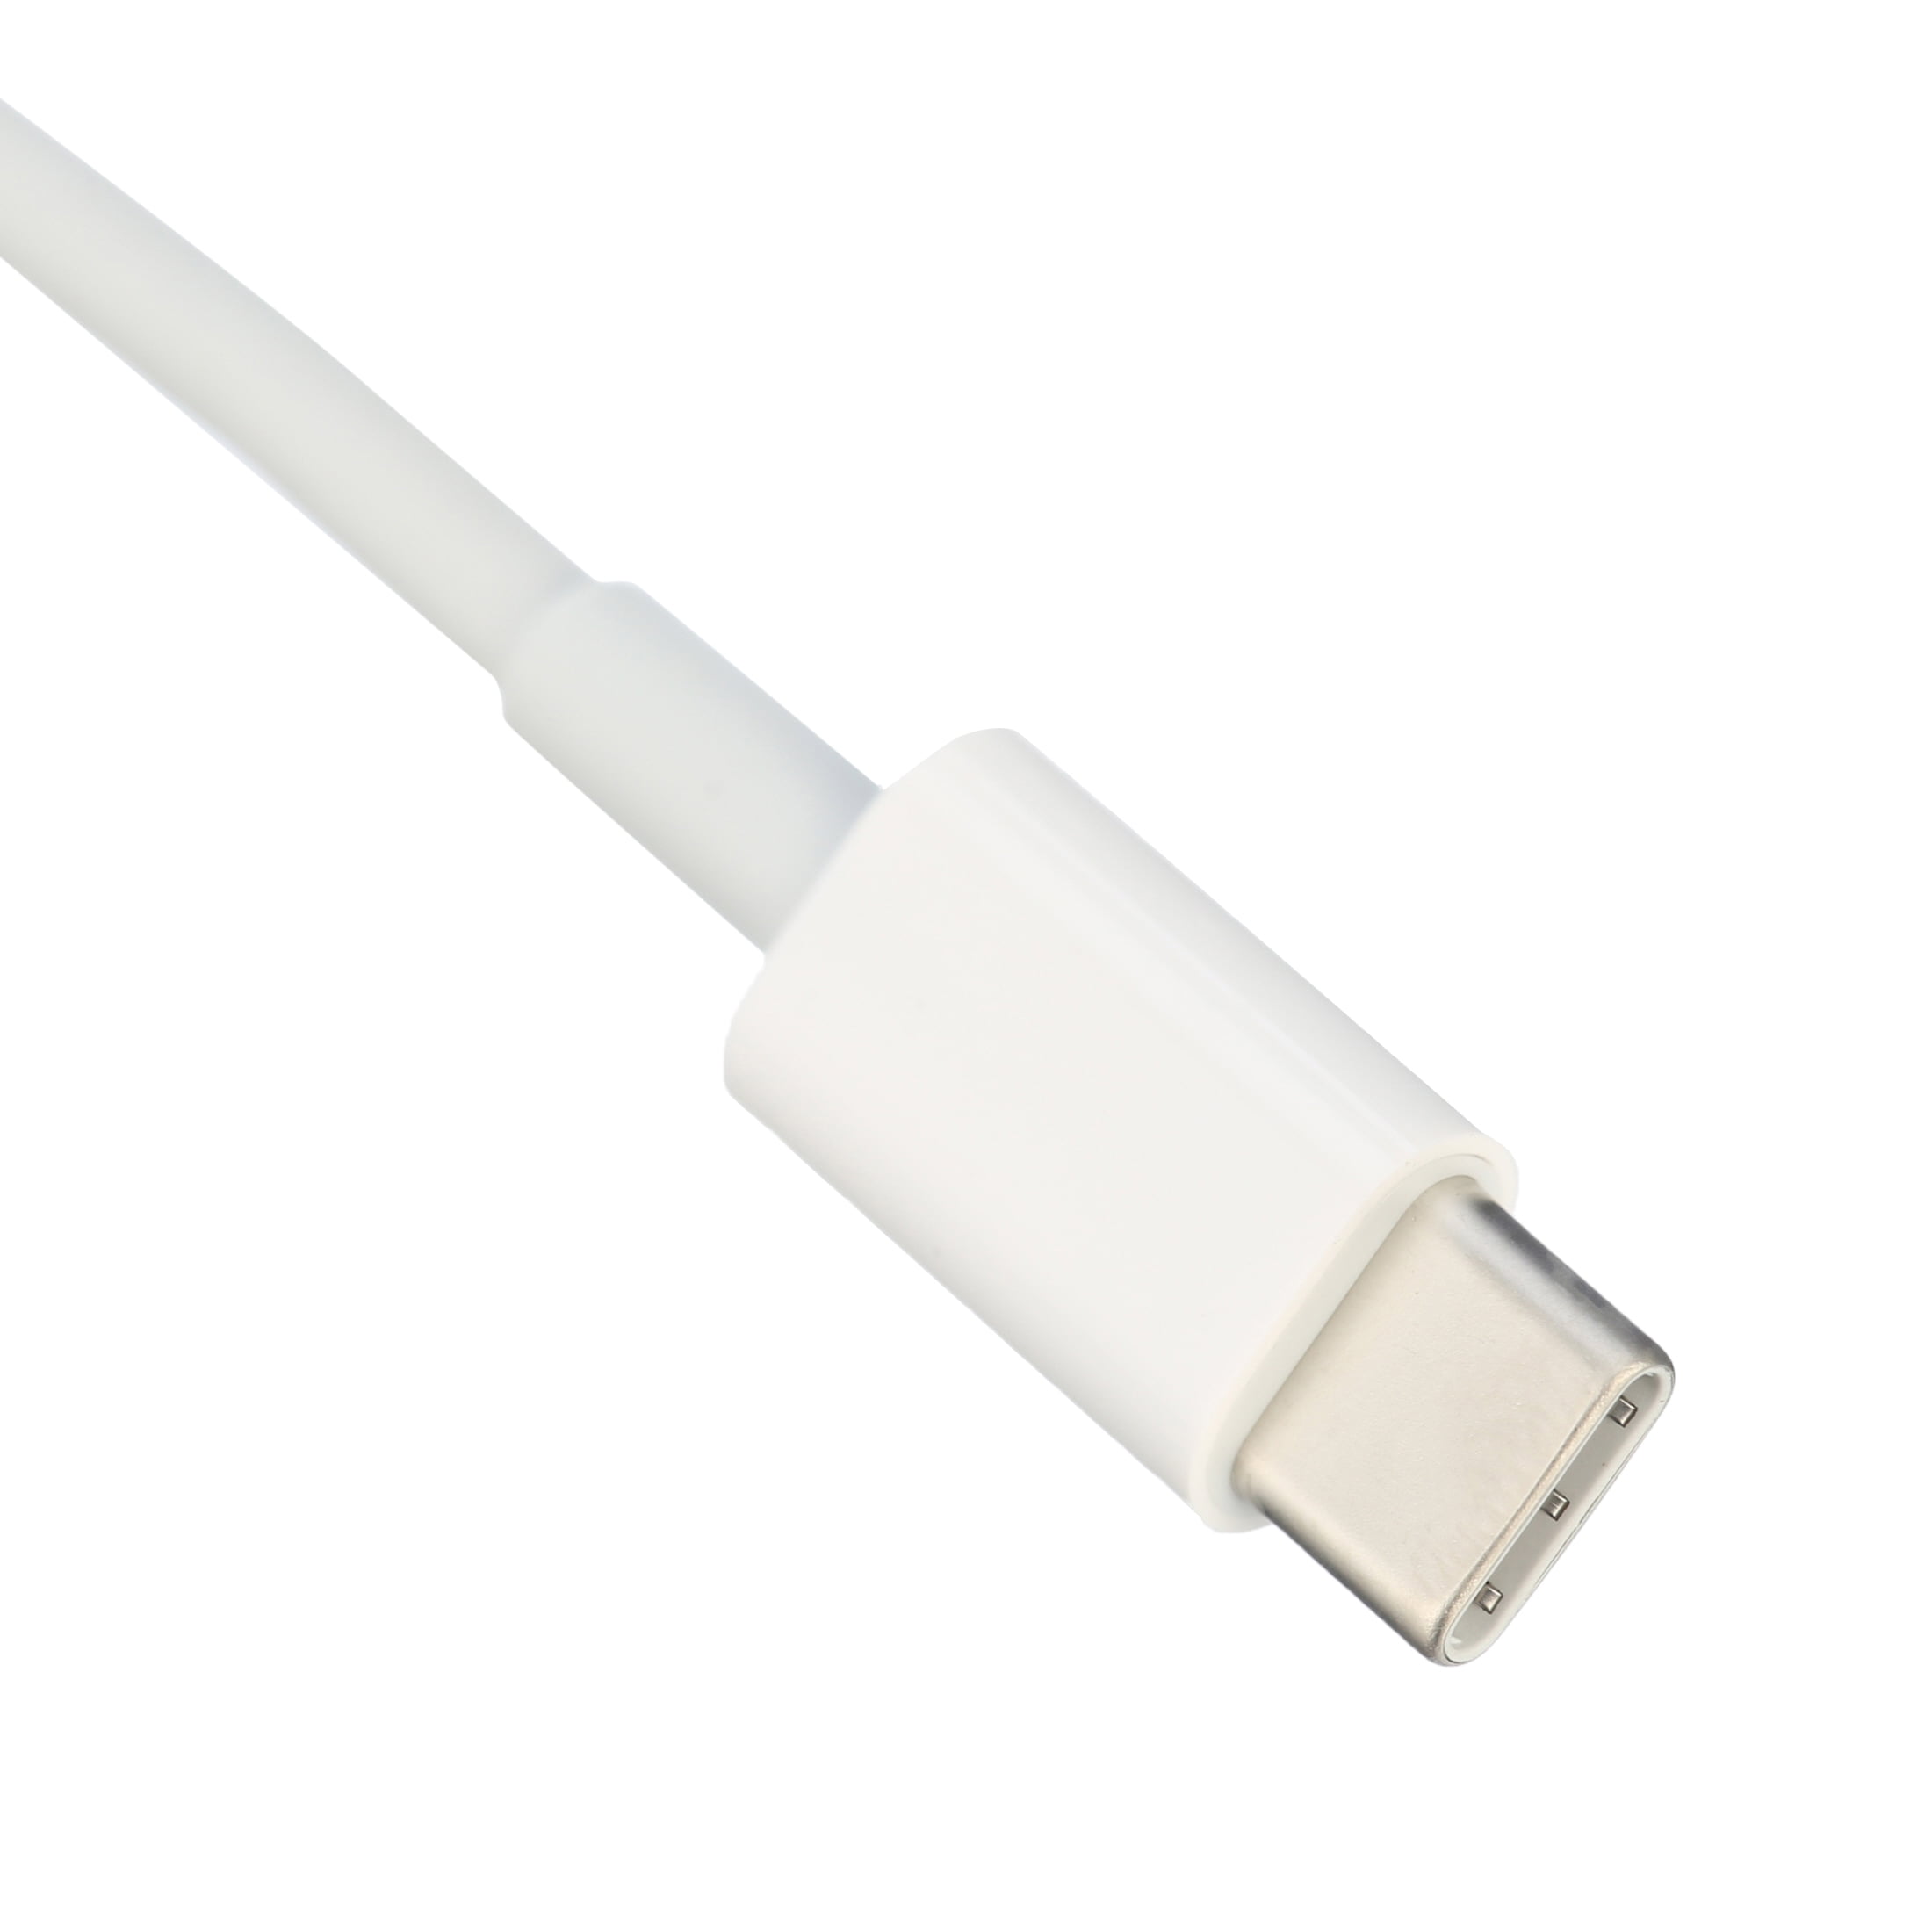 Câble Lightning Apple vers USB-C - 2M - Le Zébu